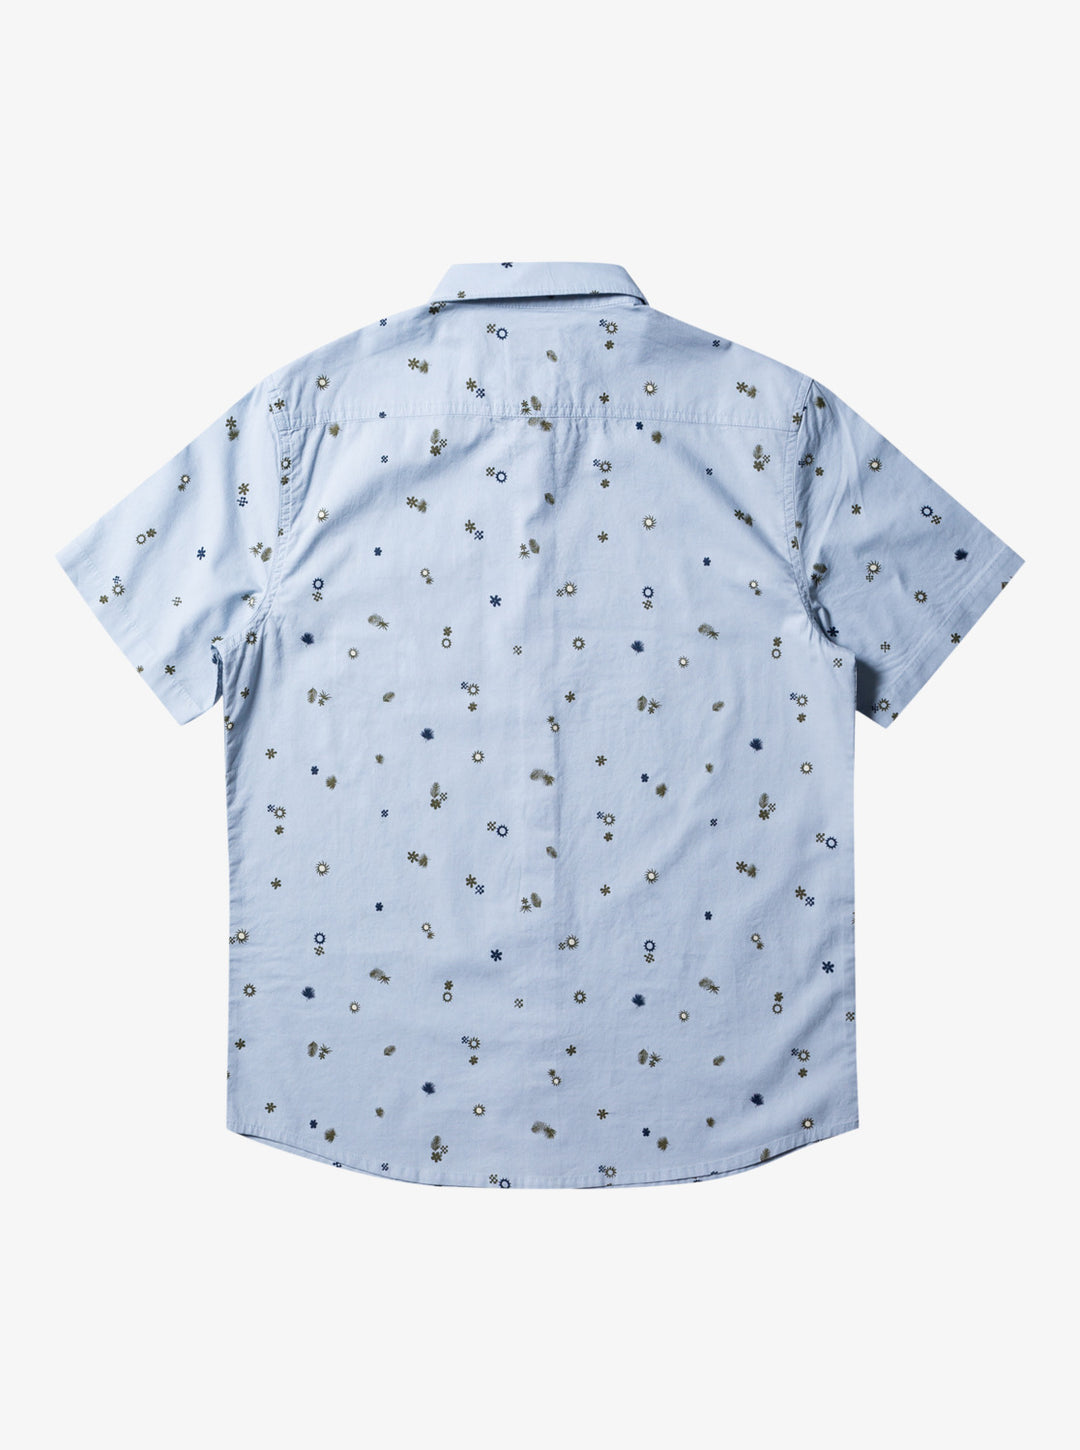 Quiksilver Peaceful Rave Short Sleeve Shirt - Celestial Blue - Sun Diego Boardshop